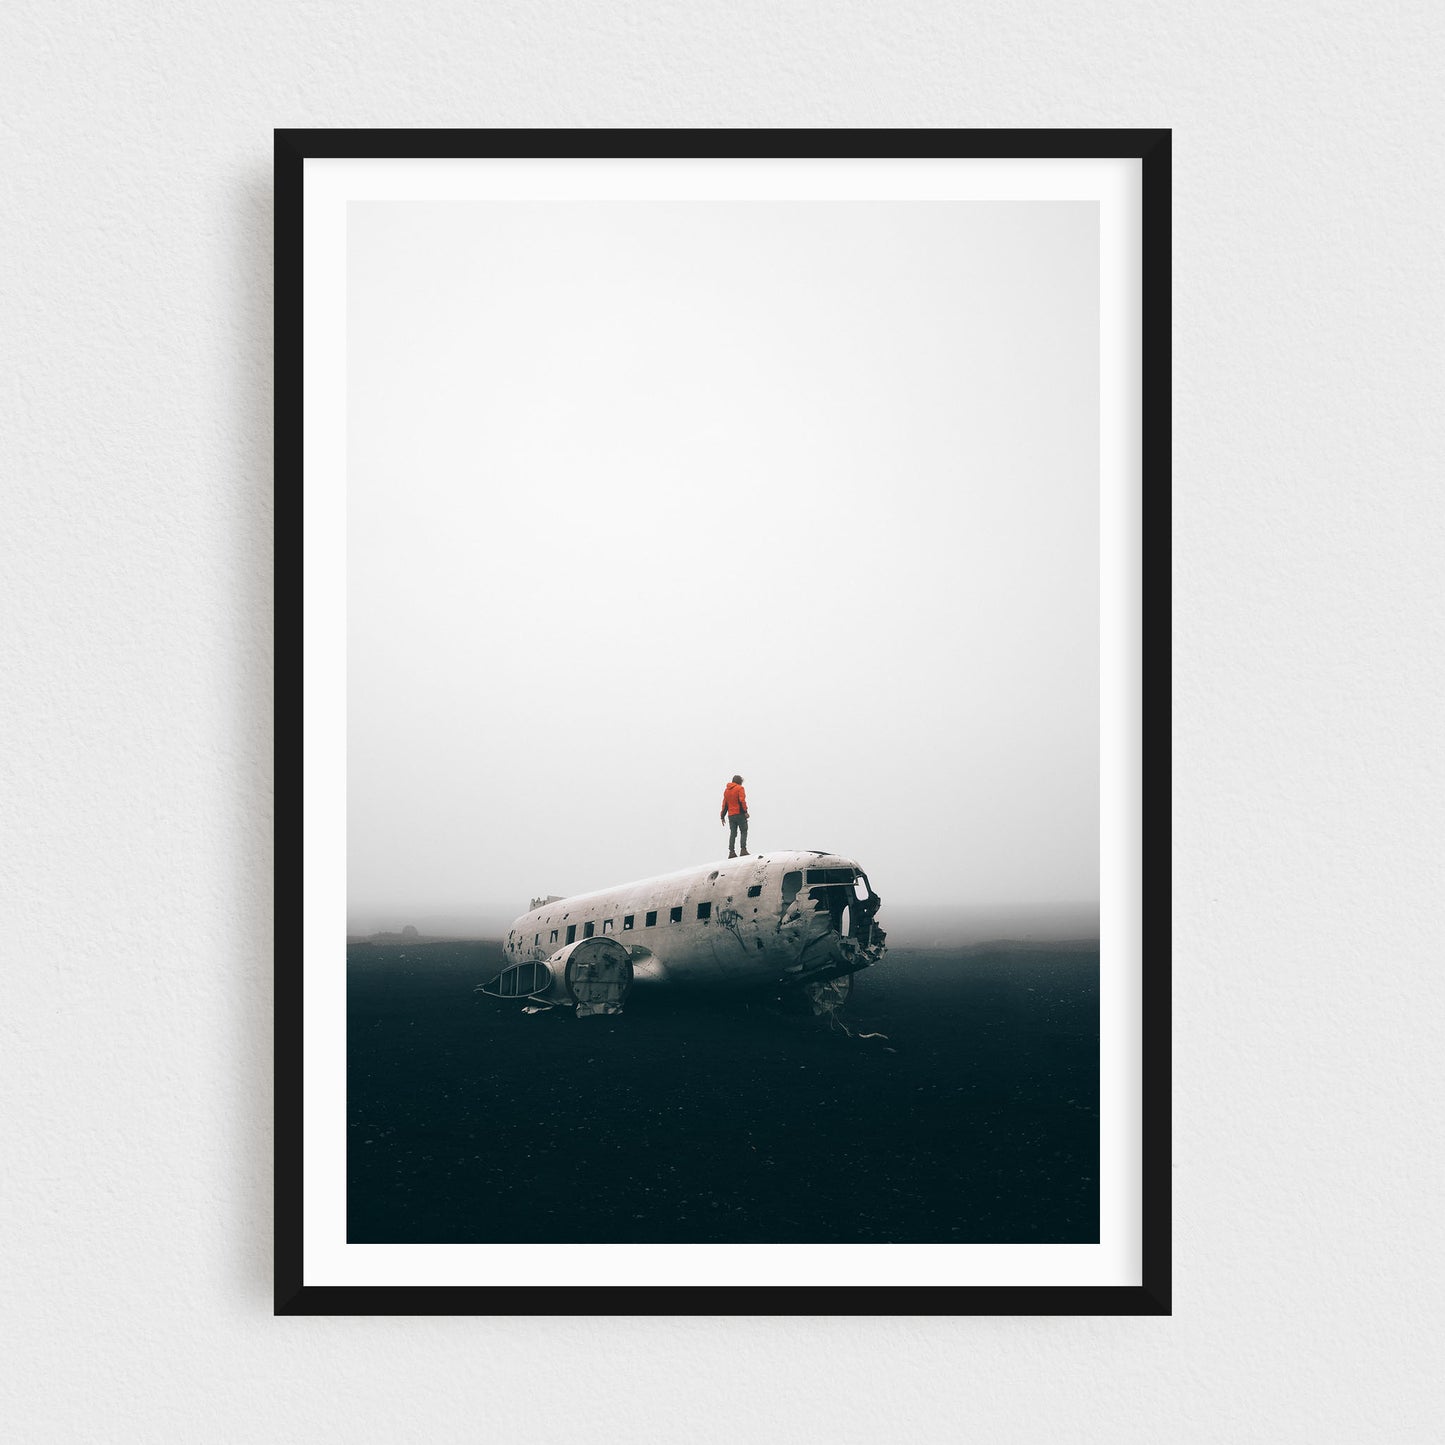 Iceland fine art photography print featuring DC3 plane crash at Solheimasandur, in a black frame